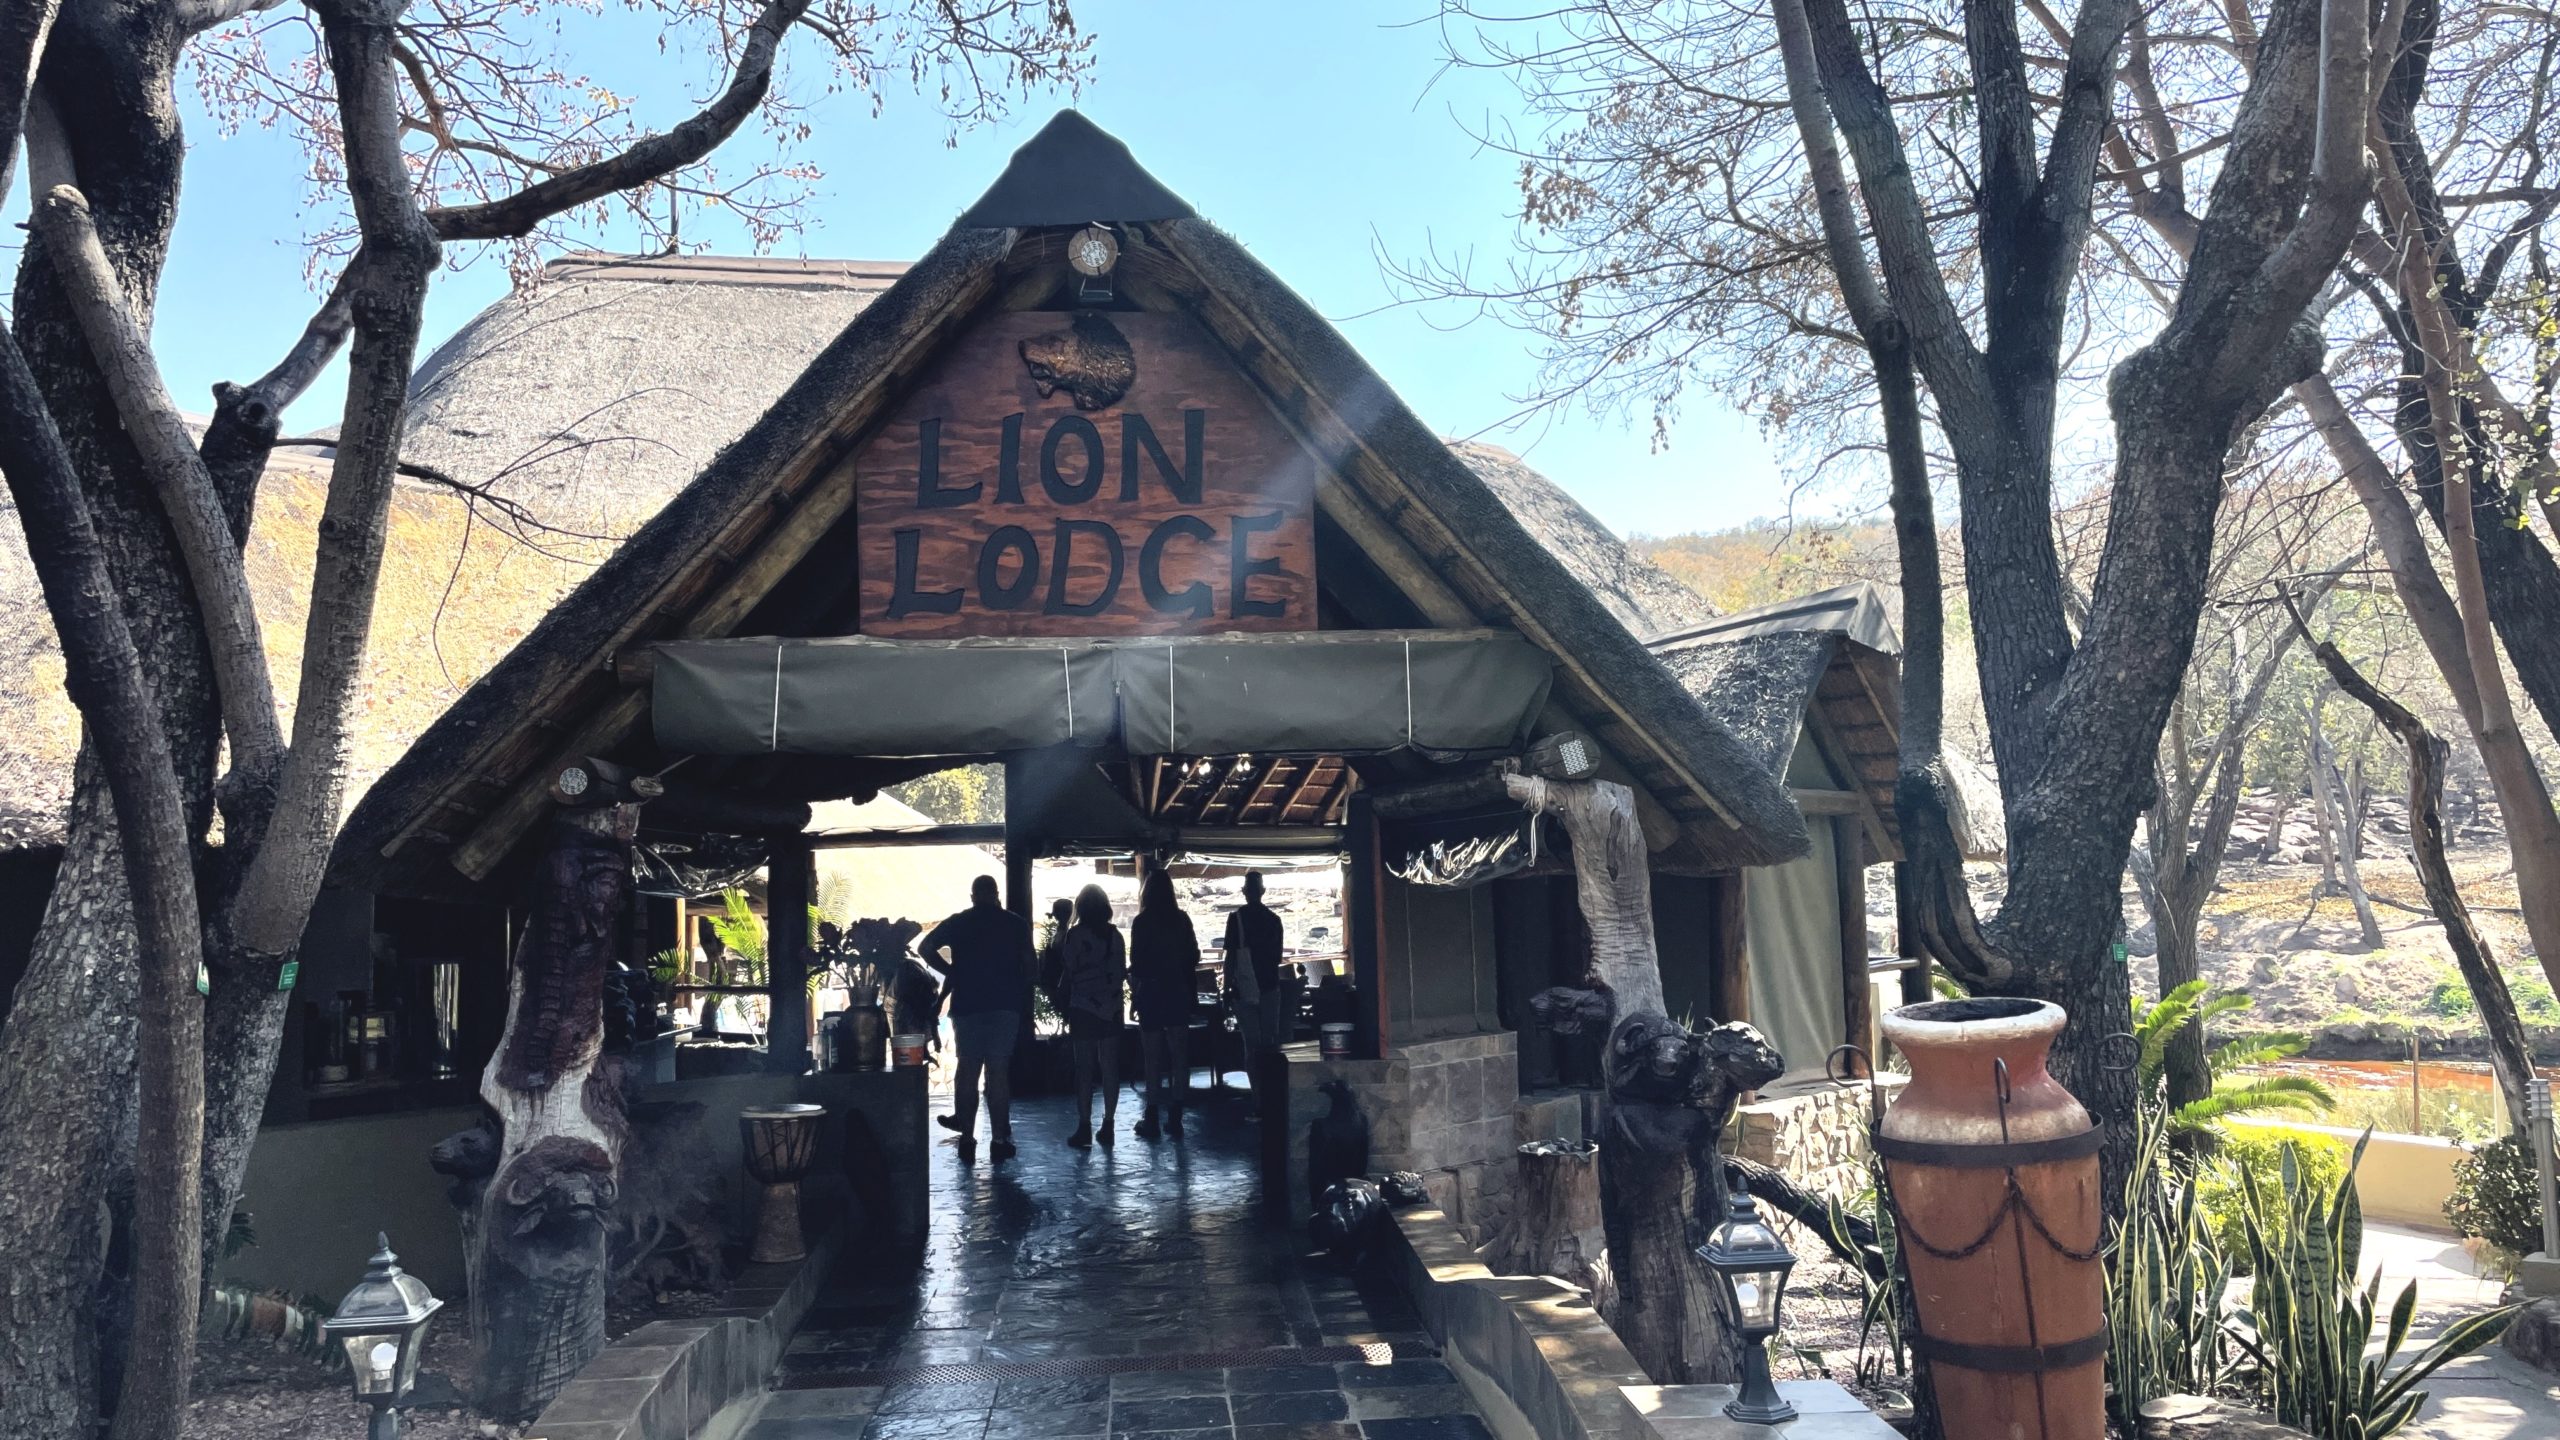 Sabatana Private Reserve Lion Lodge Entry Point Hacks by Daniel Sciberras